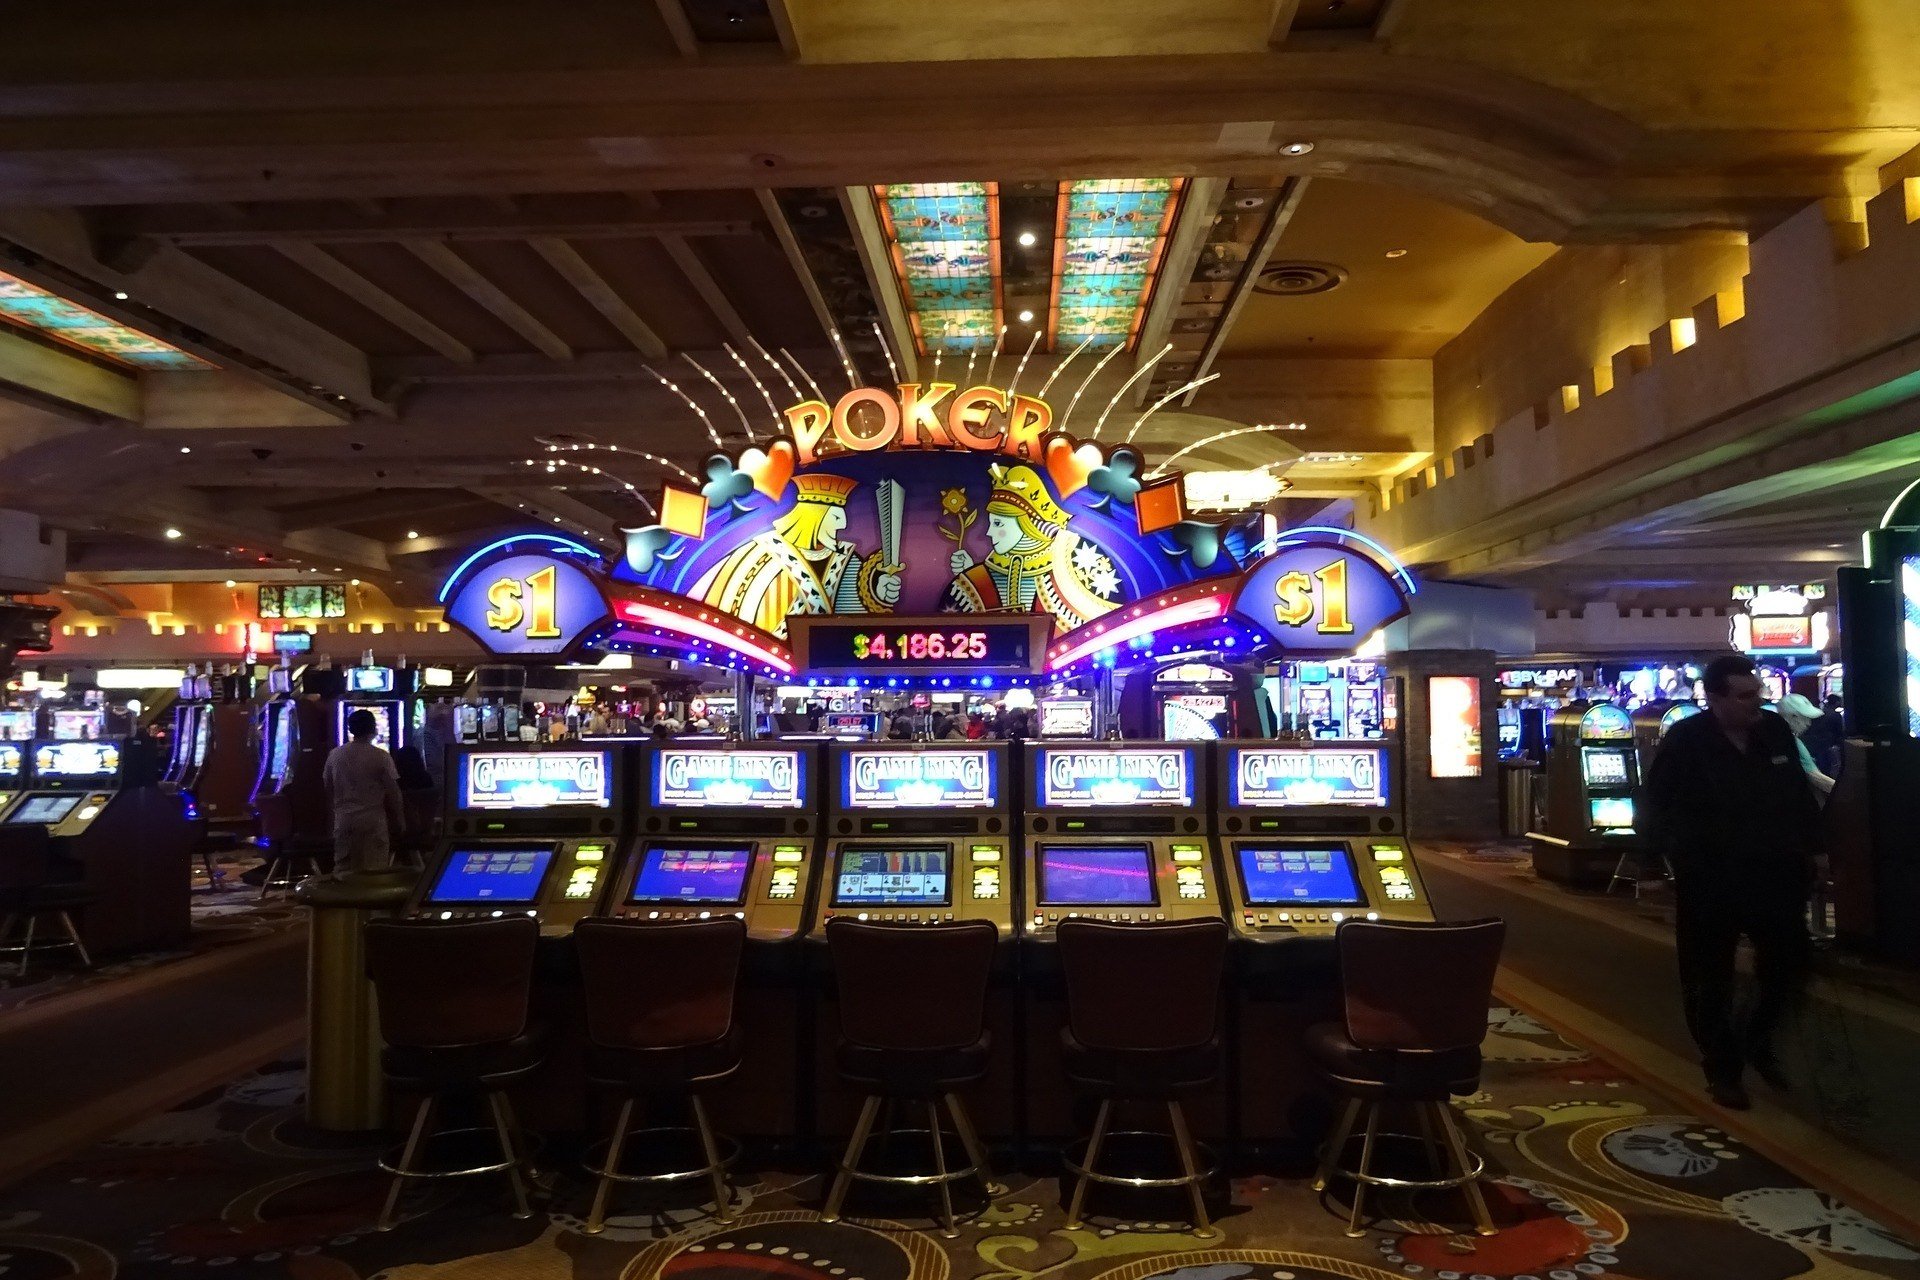 Paying taxes on casino winnings